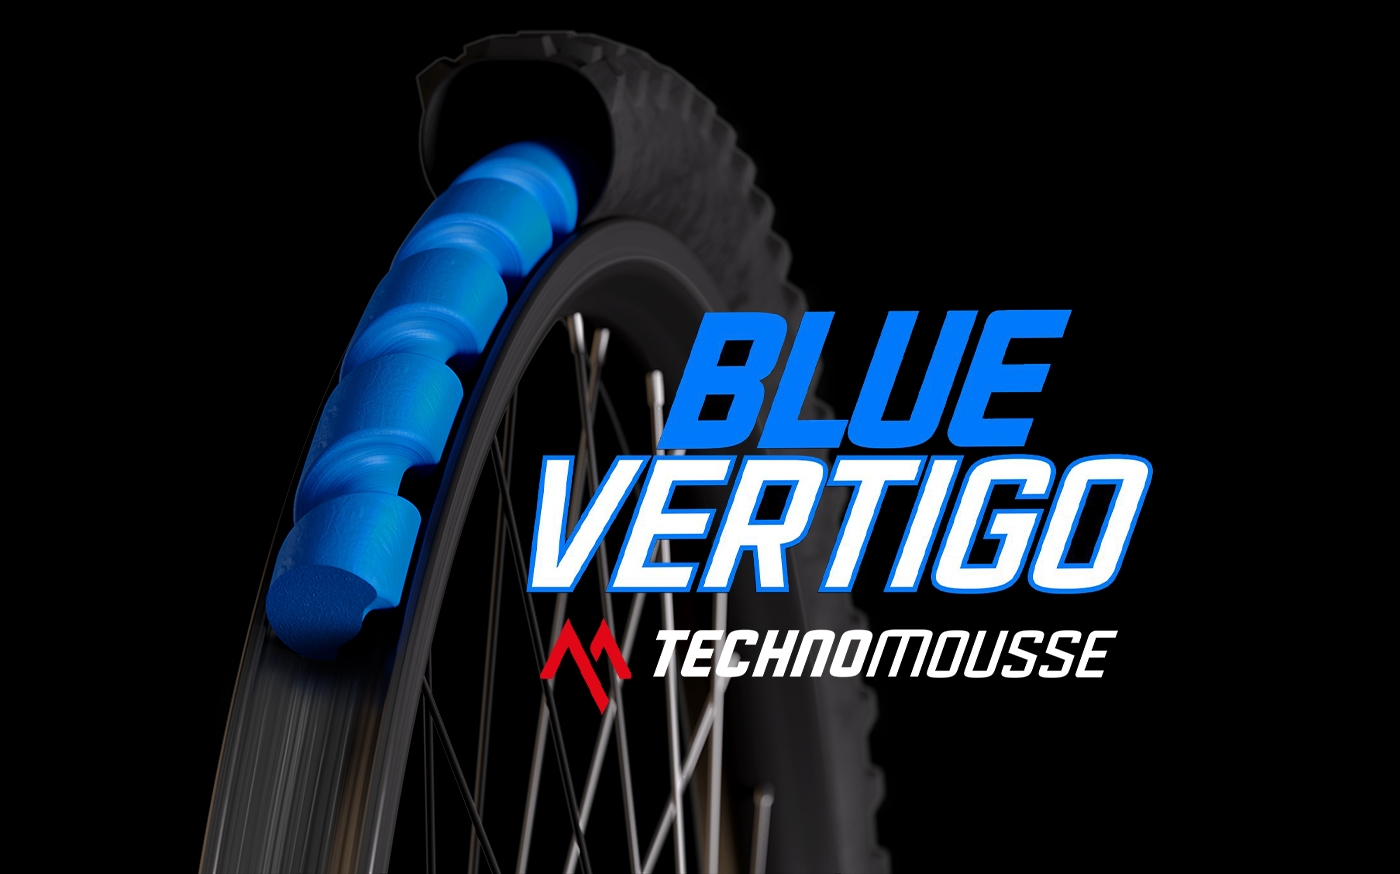 Blue Vertigo - The new insert by Technomousse 